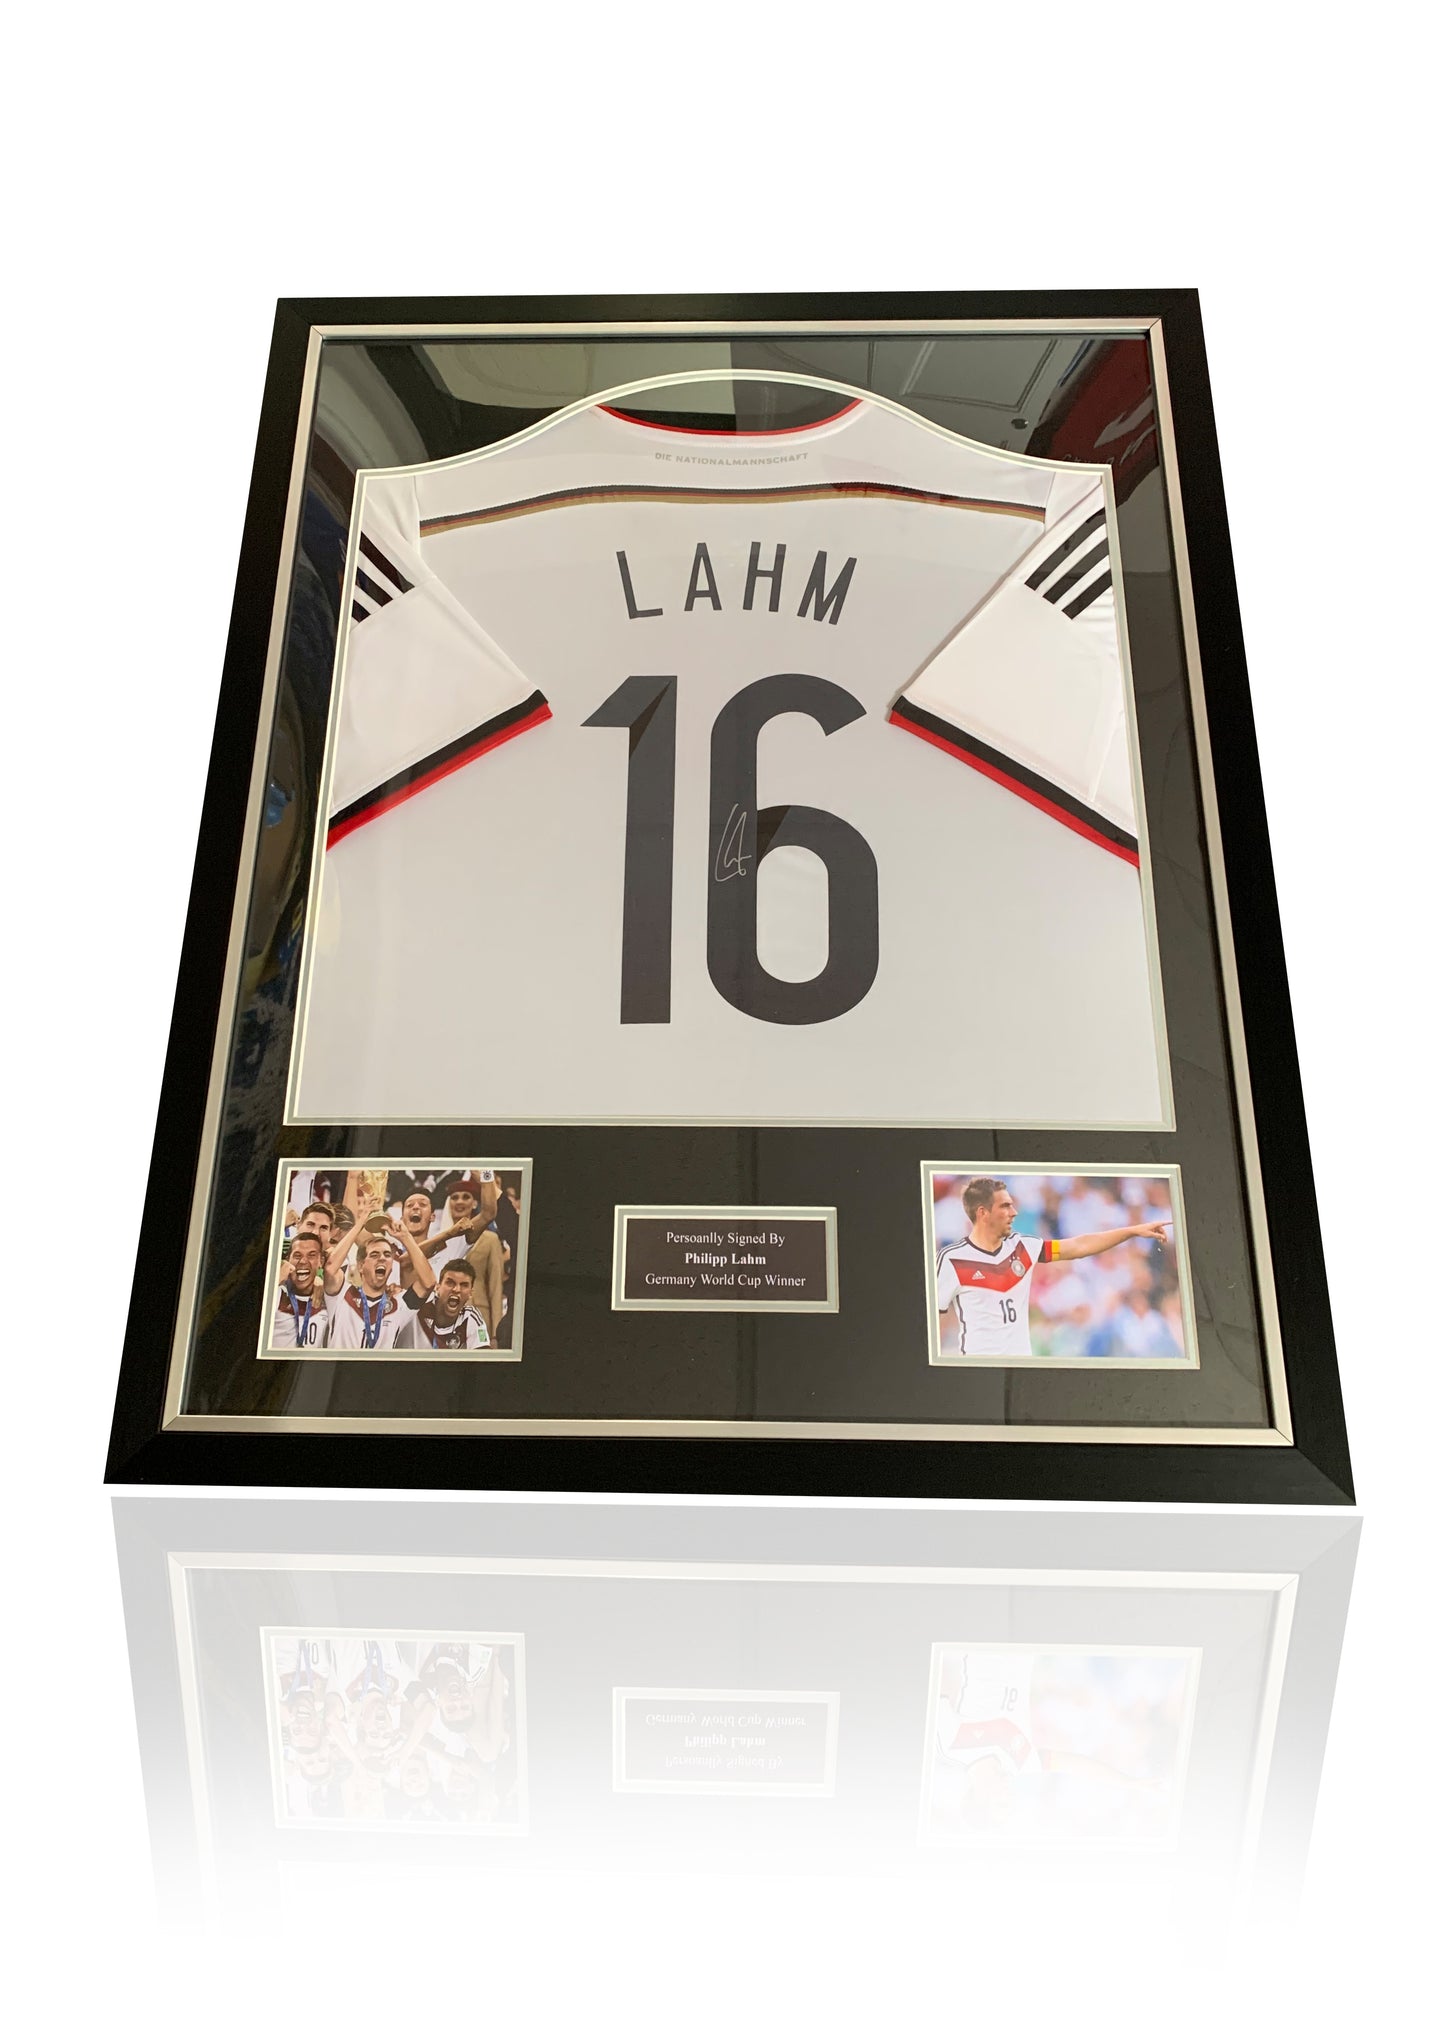 Philipp Lahm Germany World Cup winner signed framed shirt